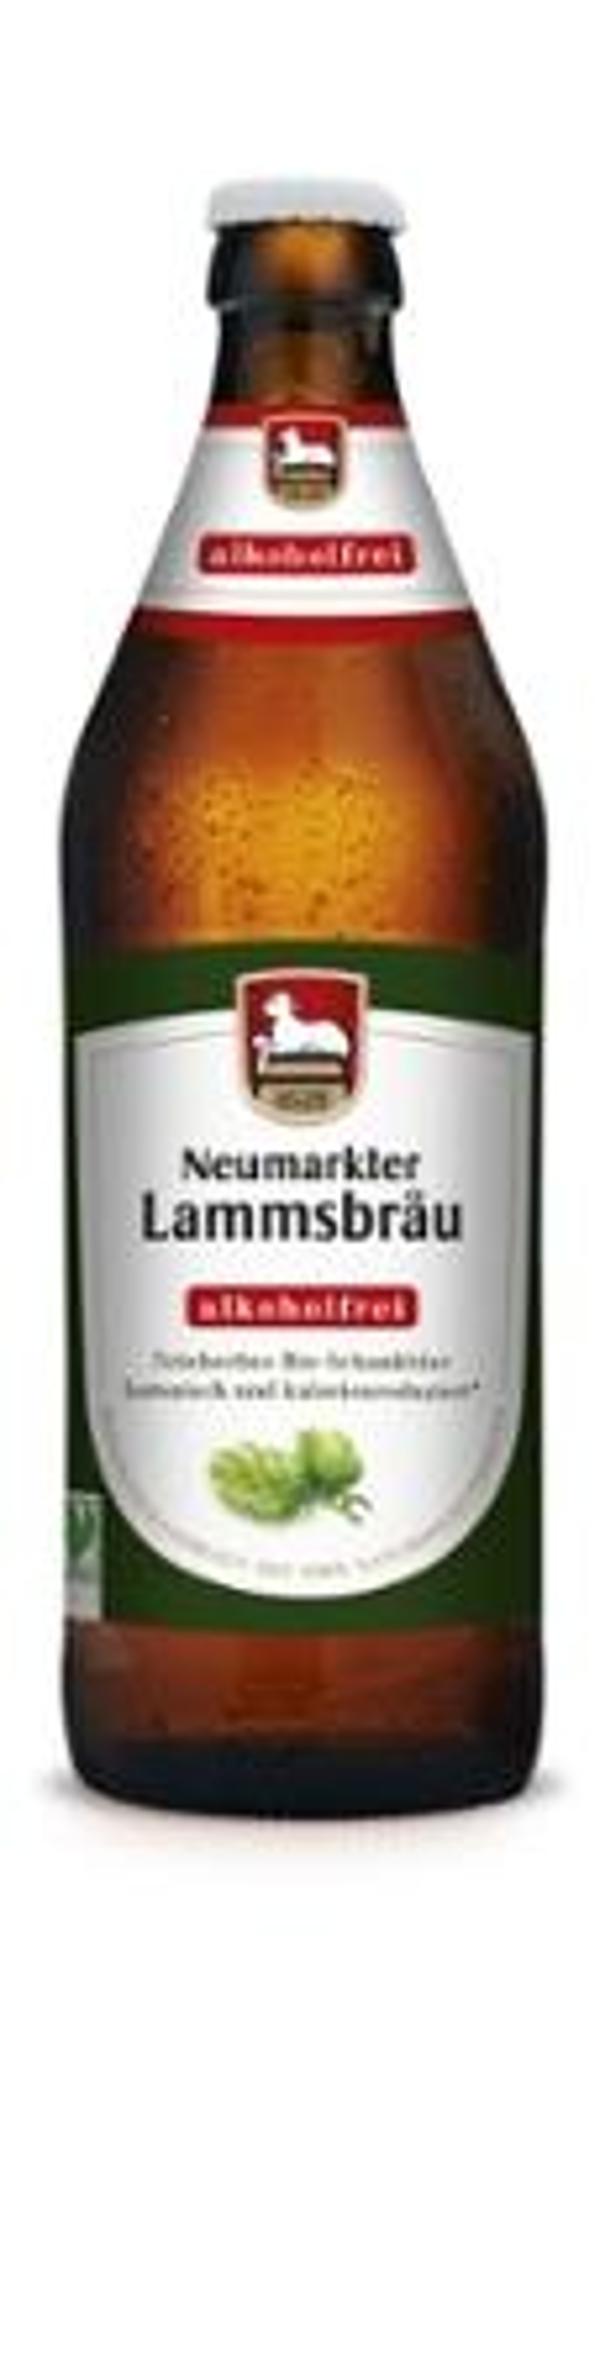 Produktfoto zu Lammsbräu Alkoholfrei